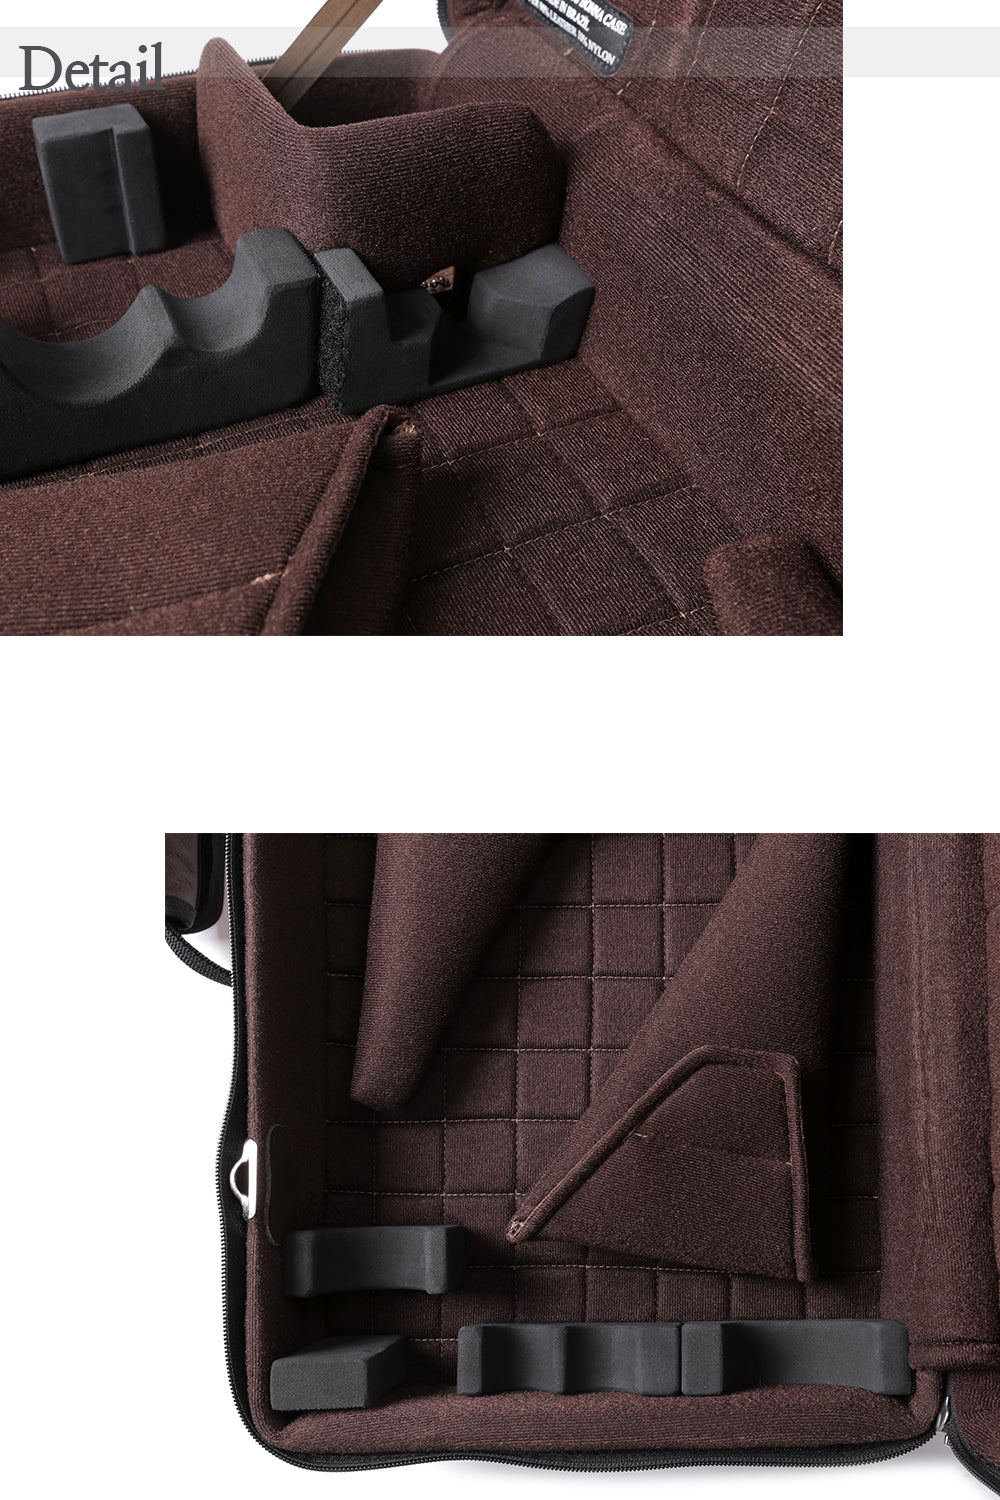 MB Bassoon Case Gentlaman - Crocodile pattern leather